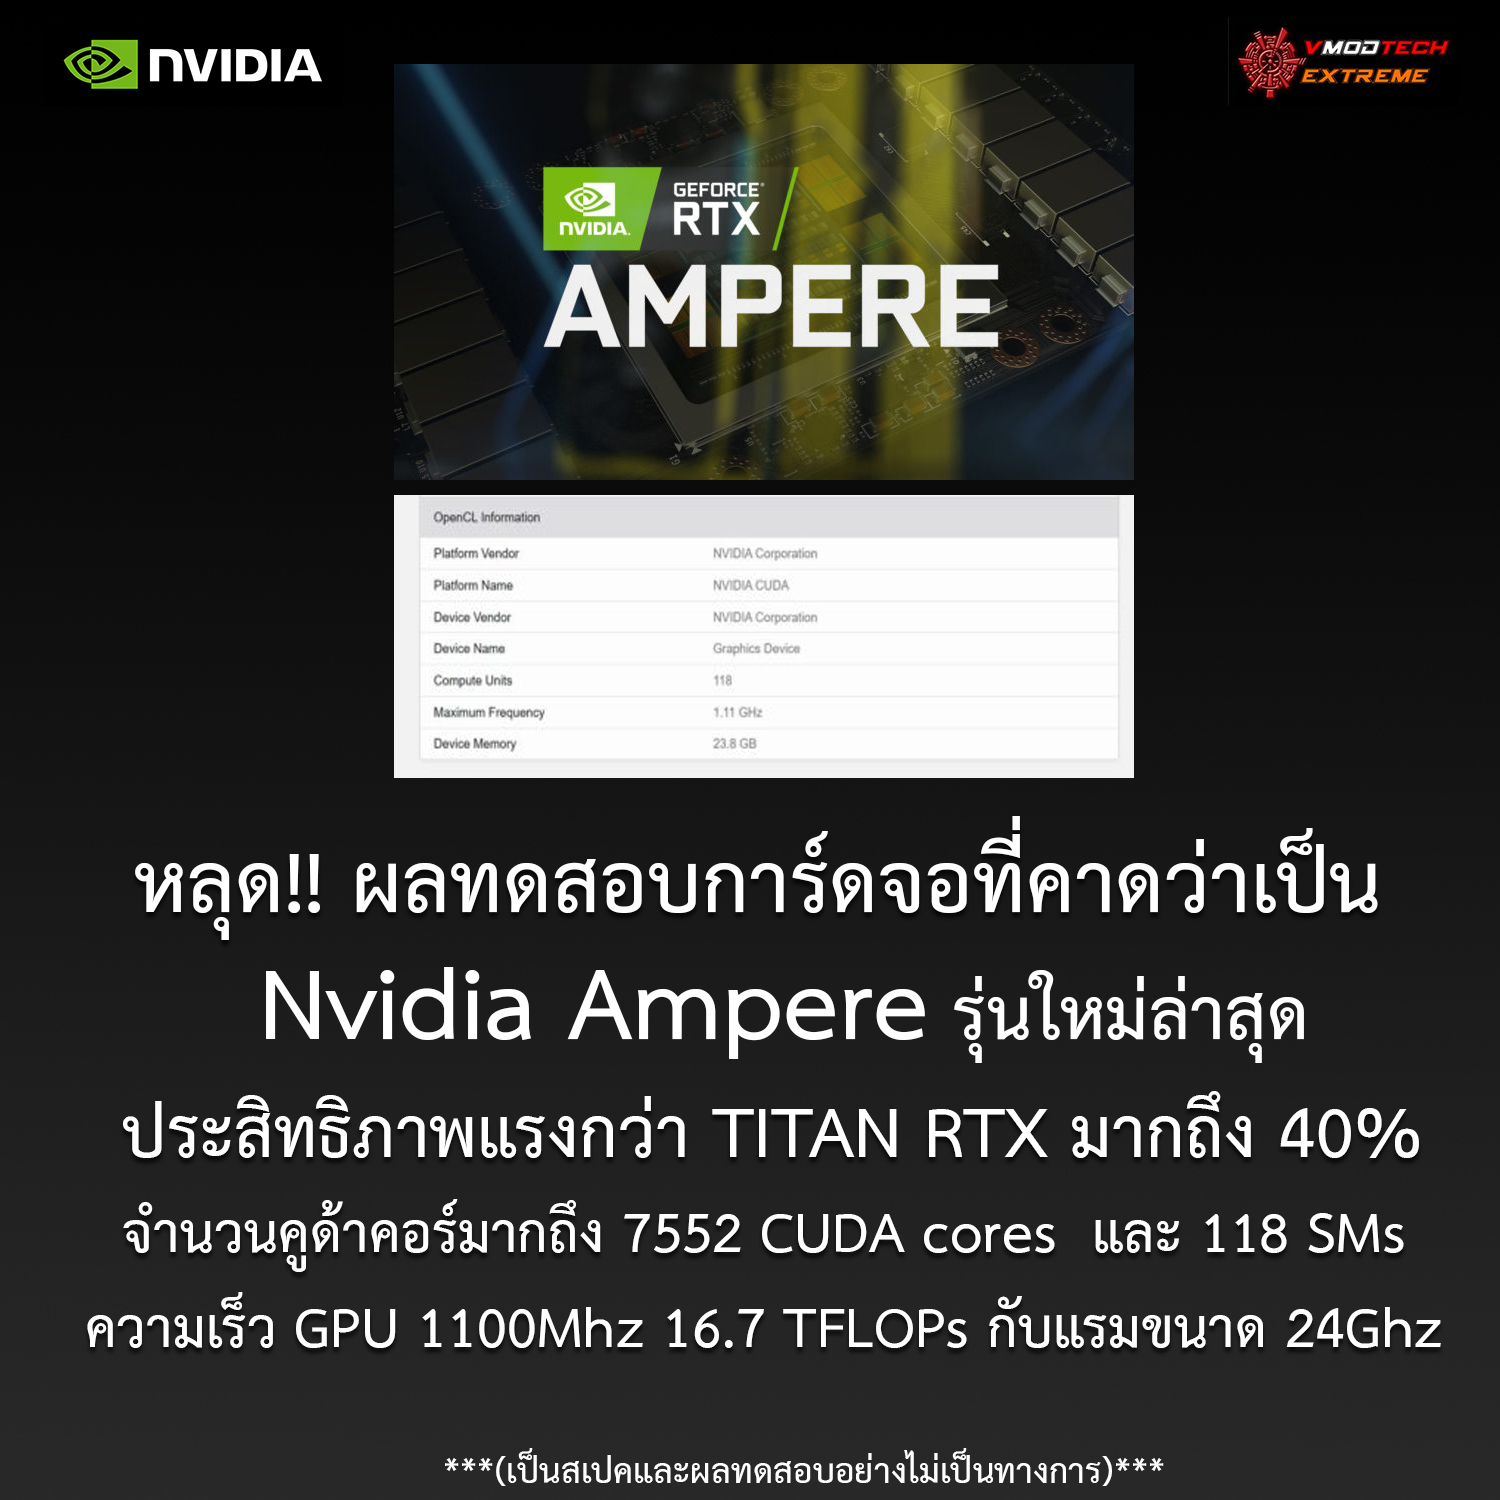 nvidia ampere หลุด!!ผลทดสอบการ์ดจอที่คาดว่าเป็น Nvidia Ampere รุ่นใหม่ล่าสุดประสิทธิภาพแรงกว่า TITAN RTX มากถึง 40% เลยทีเดียว 